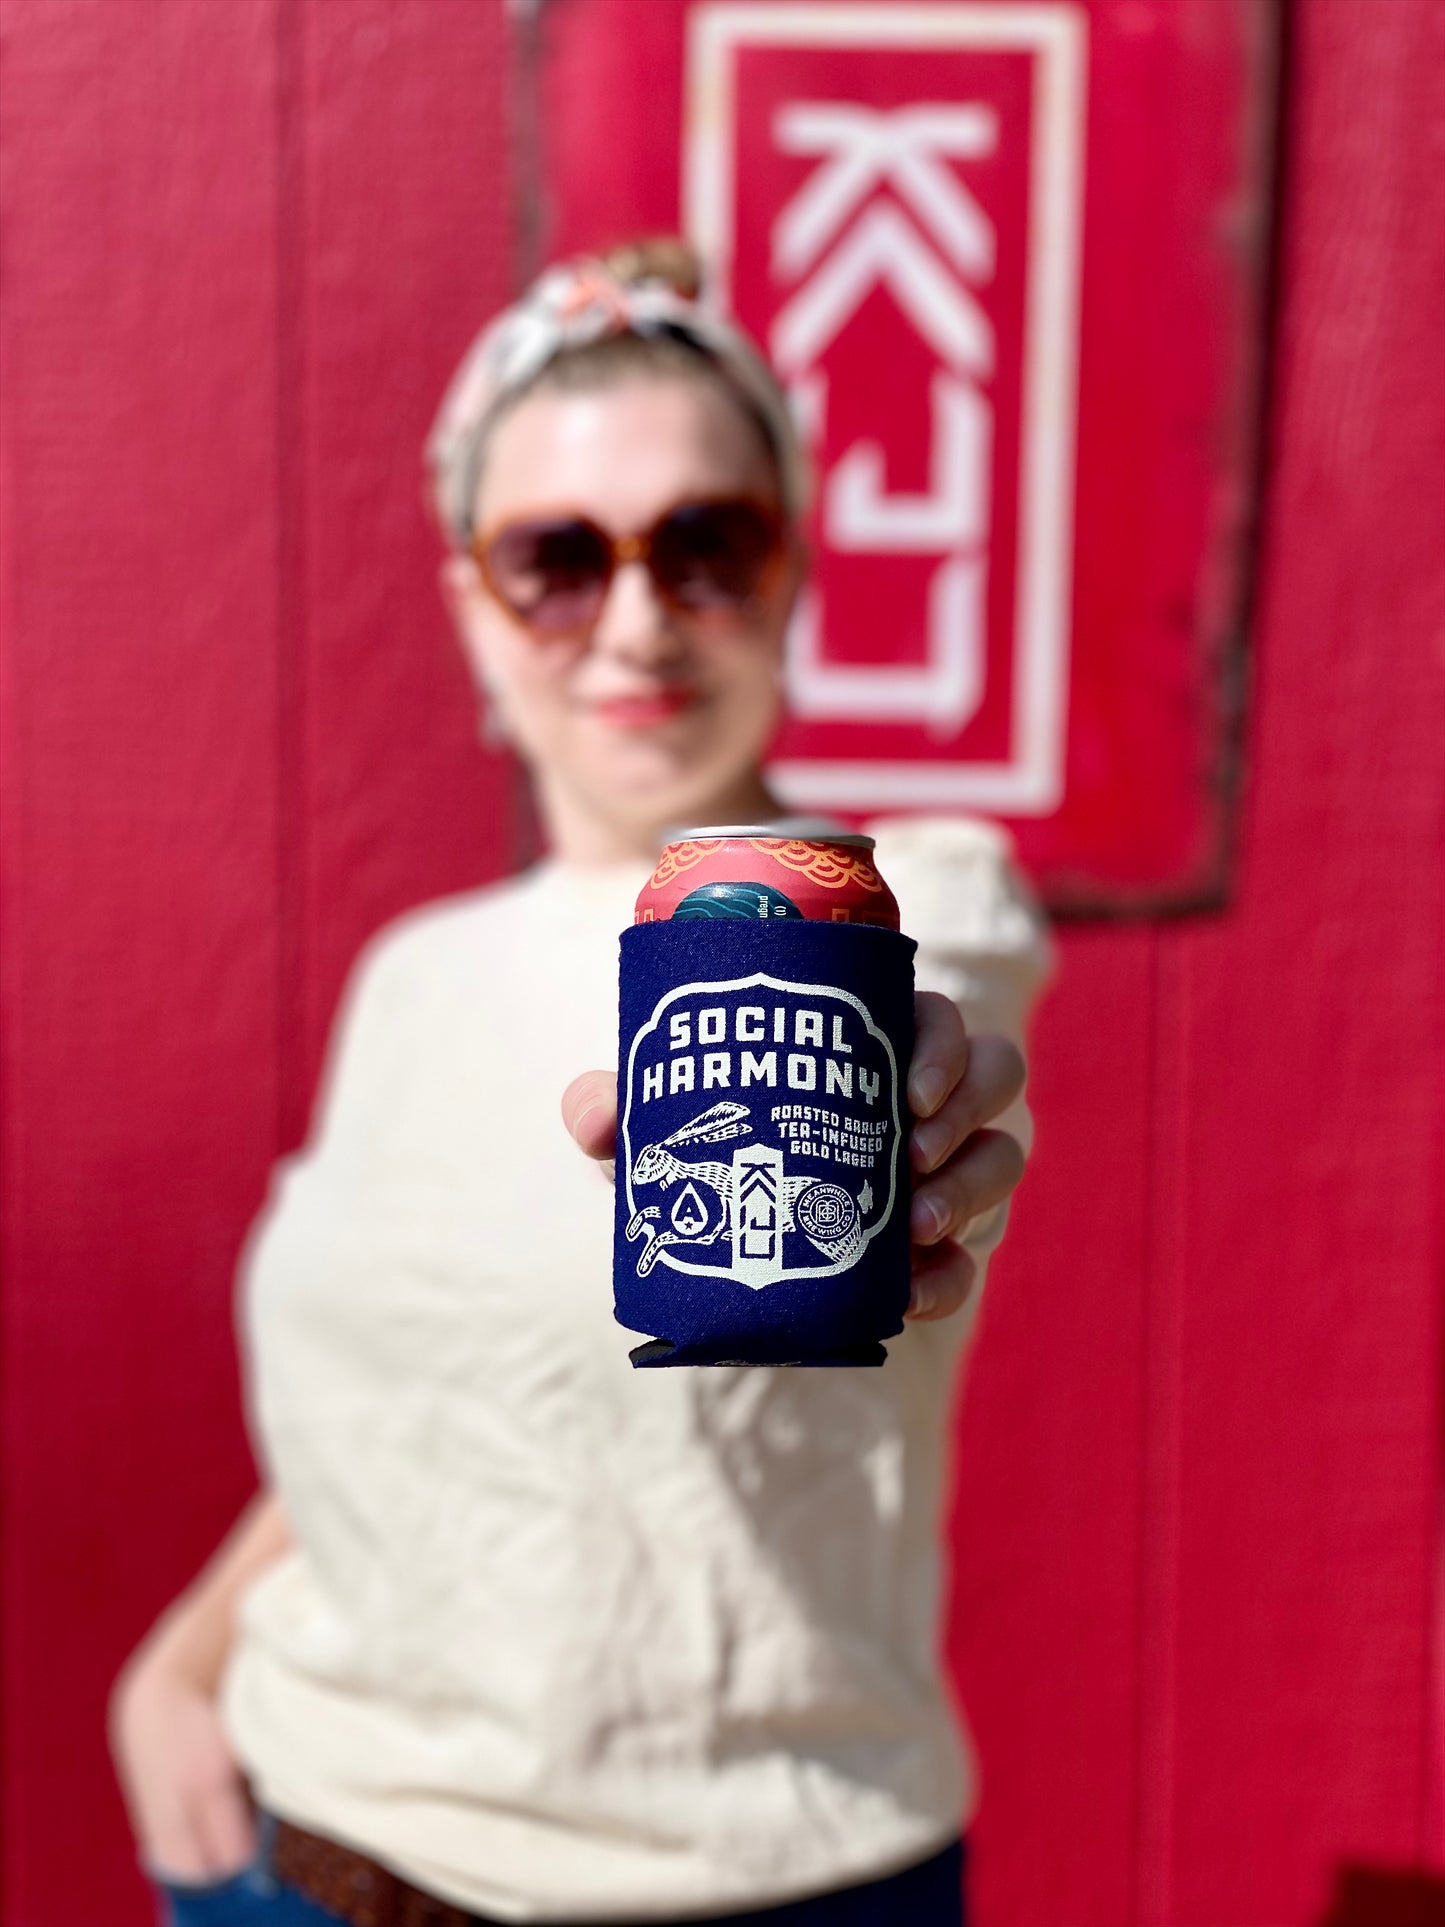 Kaiju Cut and Sew + Austin Beerworks “Social Harmony” Koozie | Made in Austin, TX